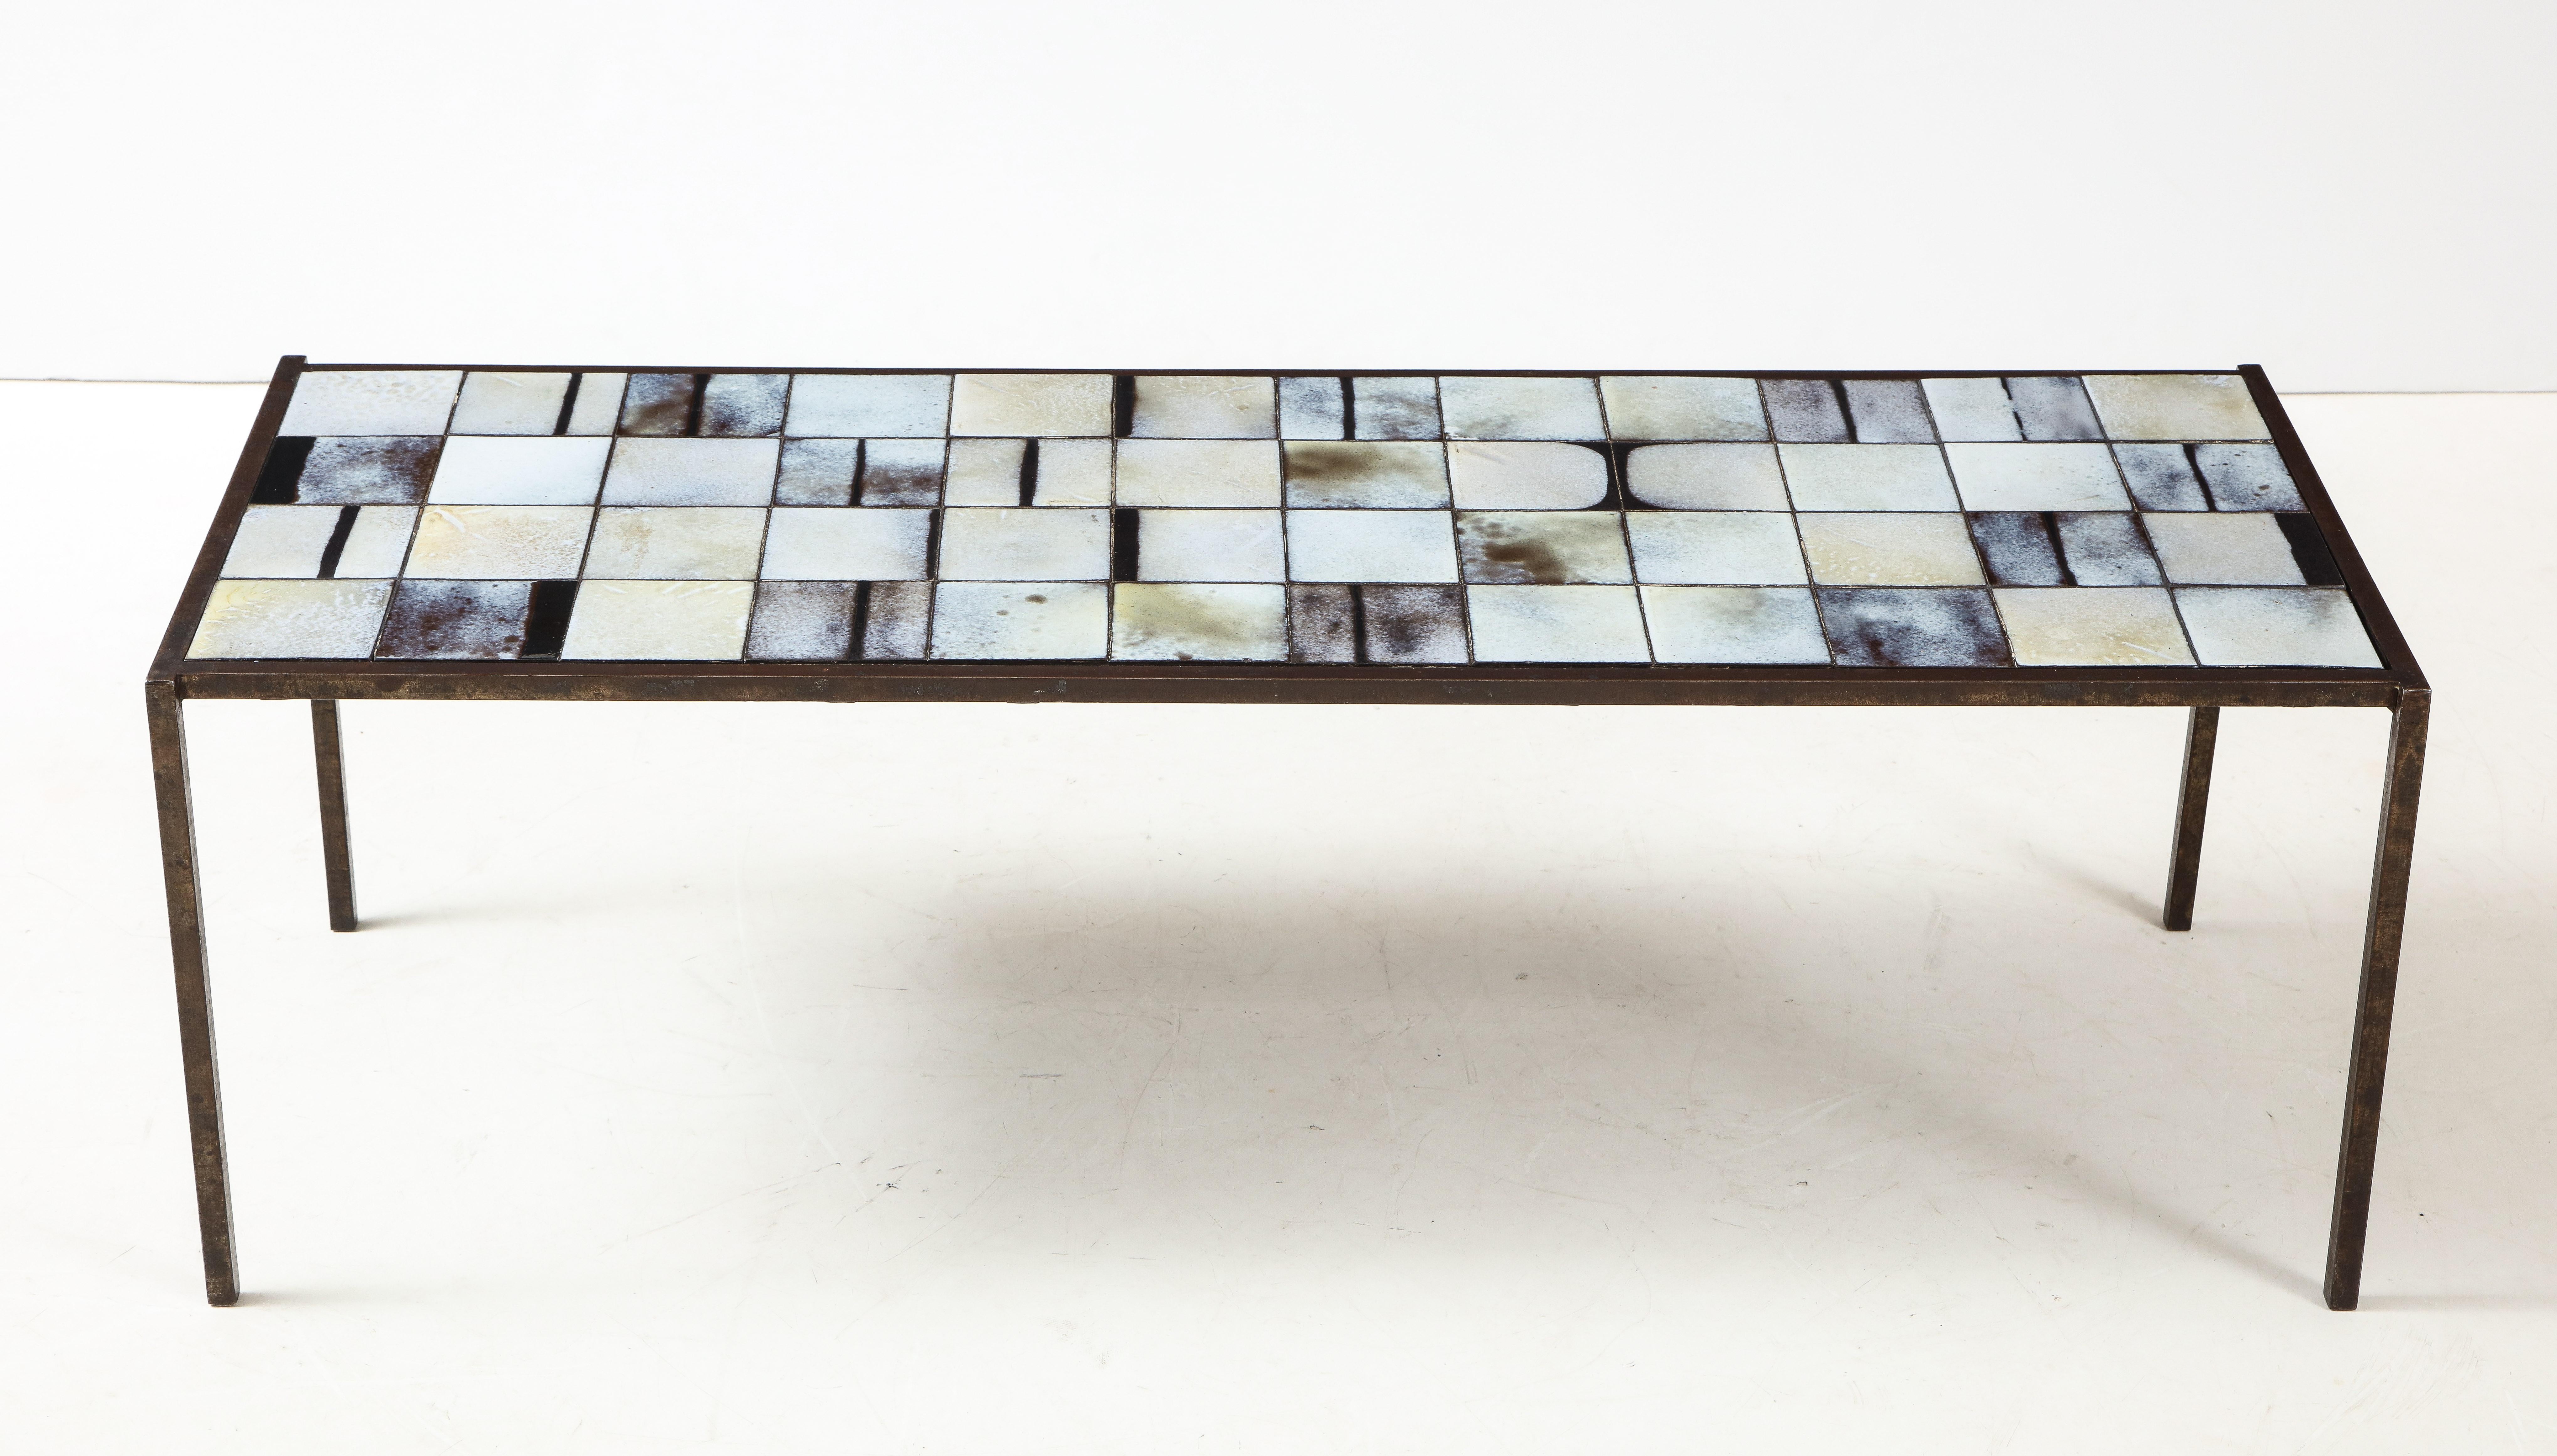 Mado Jolain (b. 1921, France) 
Ceramic tile and iron coffee table, circa 1950s
Measures: H 16, D 18, W 48.5 in.

Atelier Mado Jolain, Réne Legrand